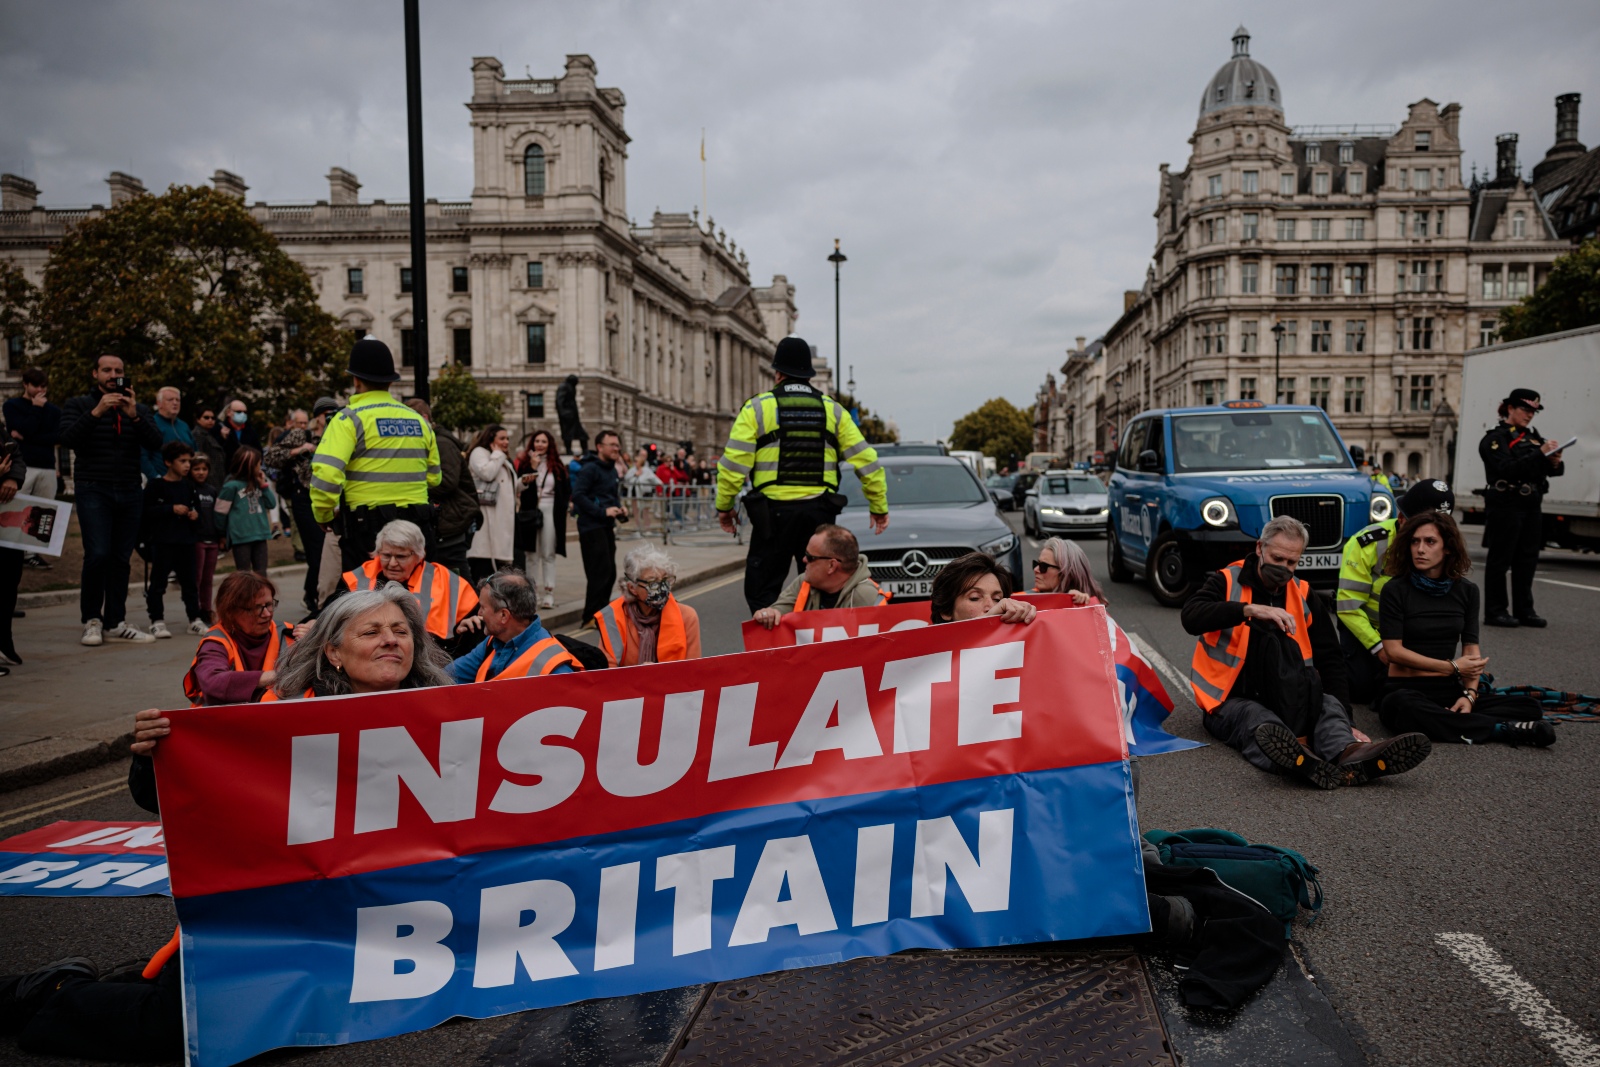 Demonstrators holding an Insulate Britain sign block traffic.